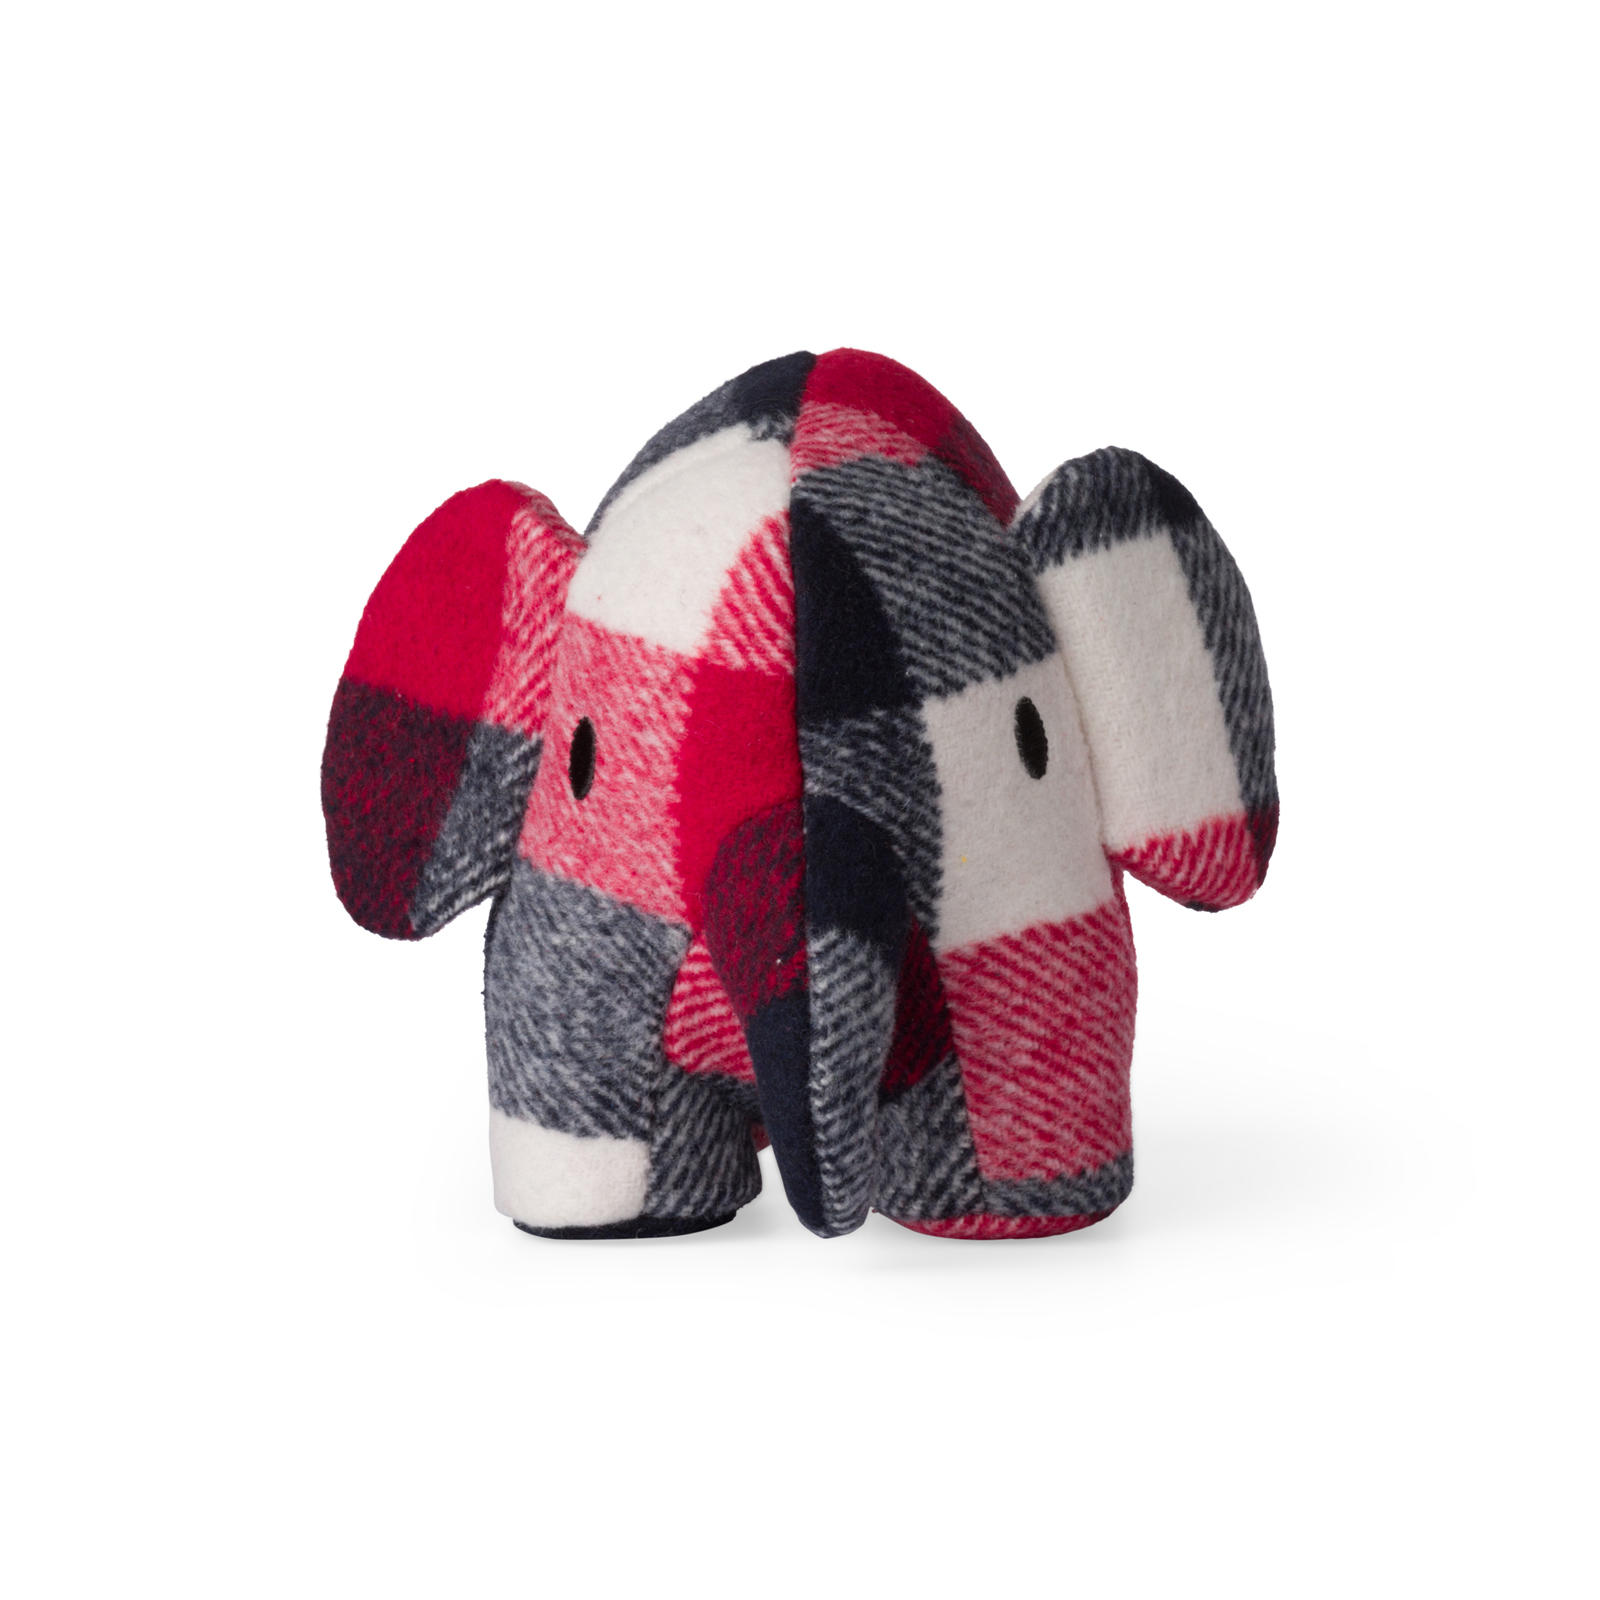 【BON TON TOYS】 Elephant(エレファント) Check(チェック) 20cm Red